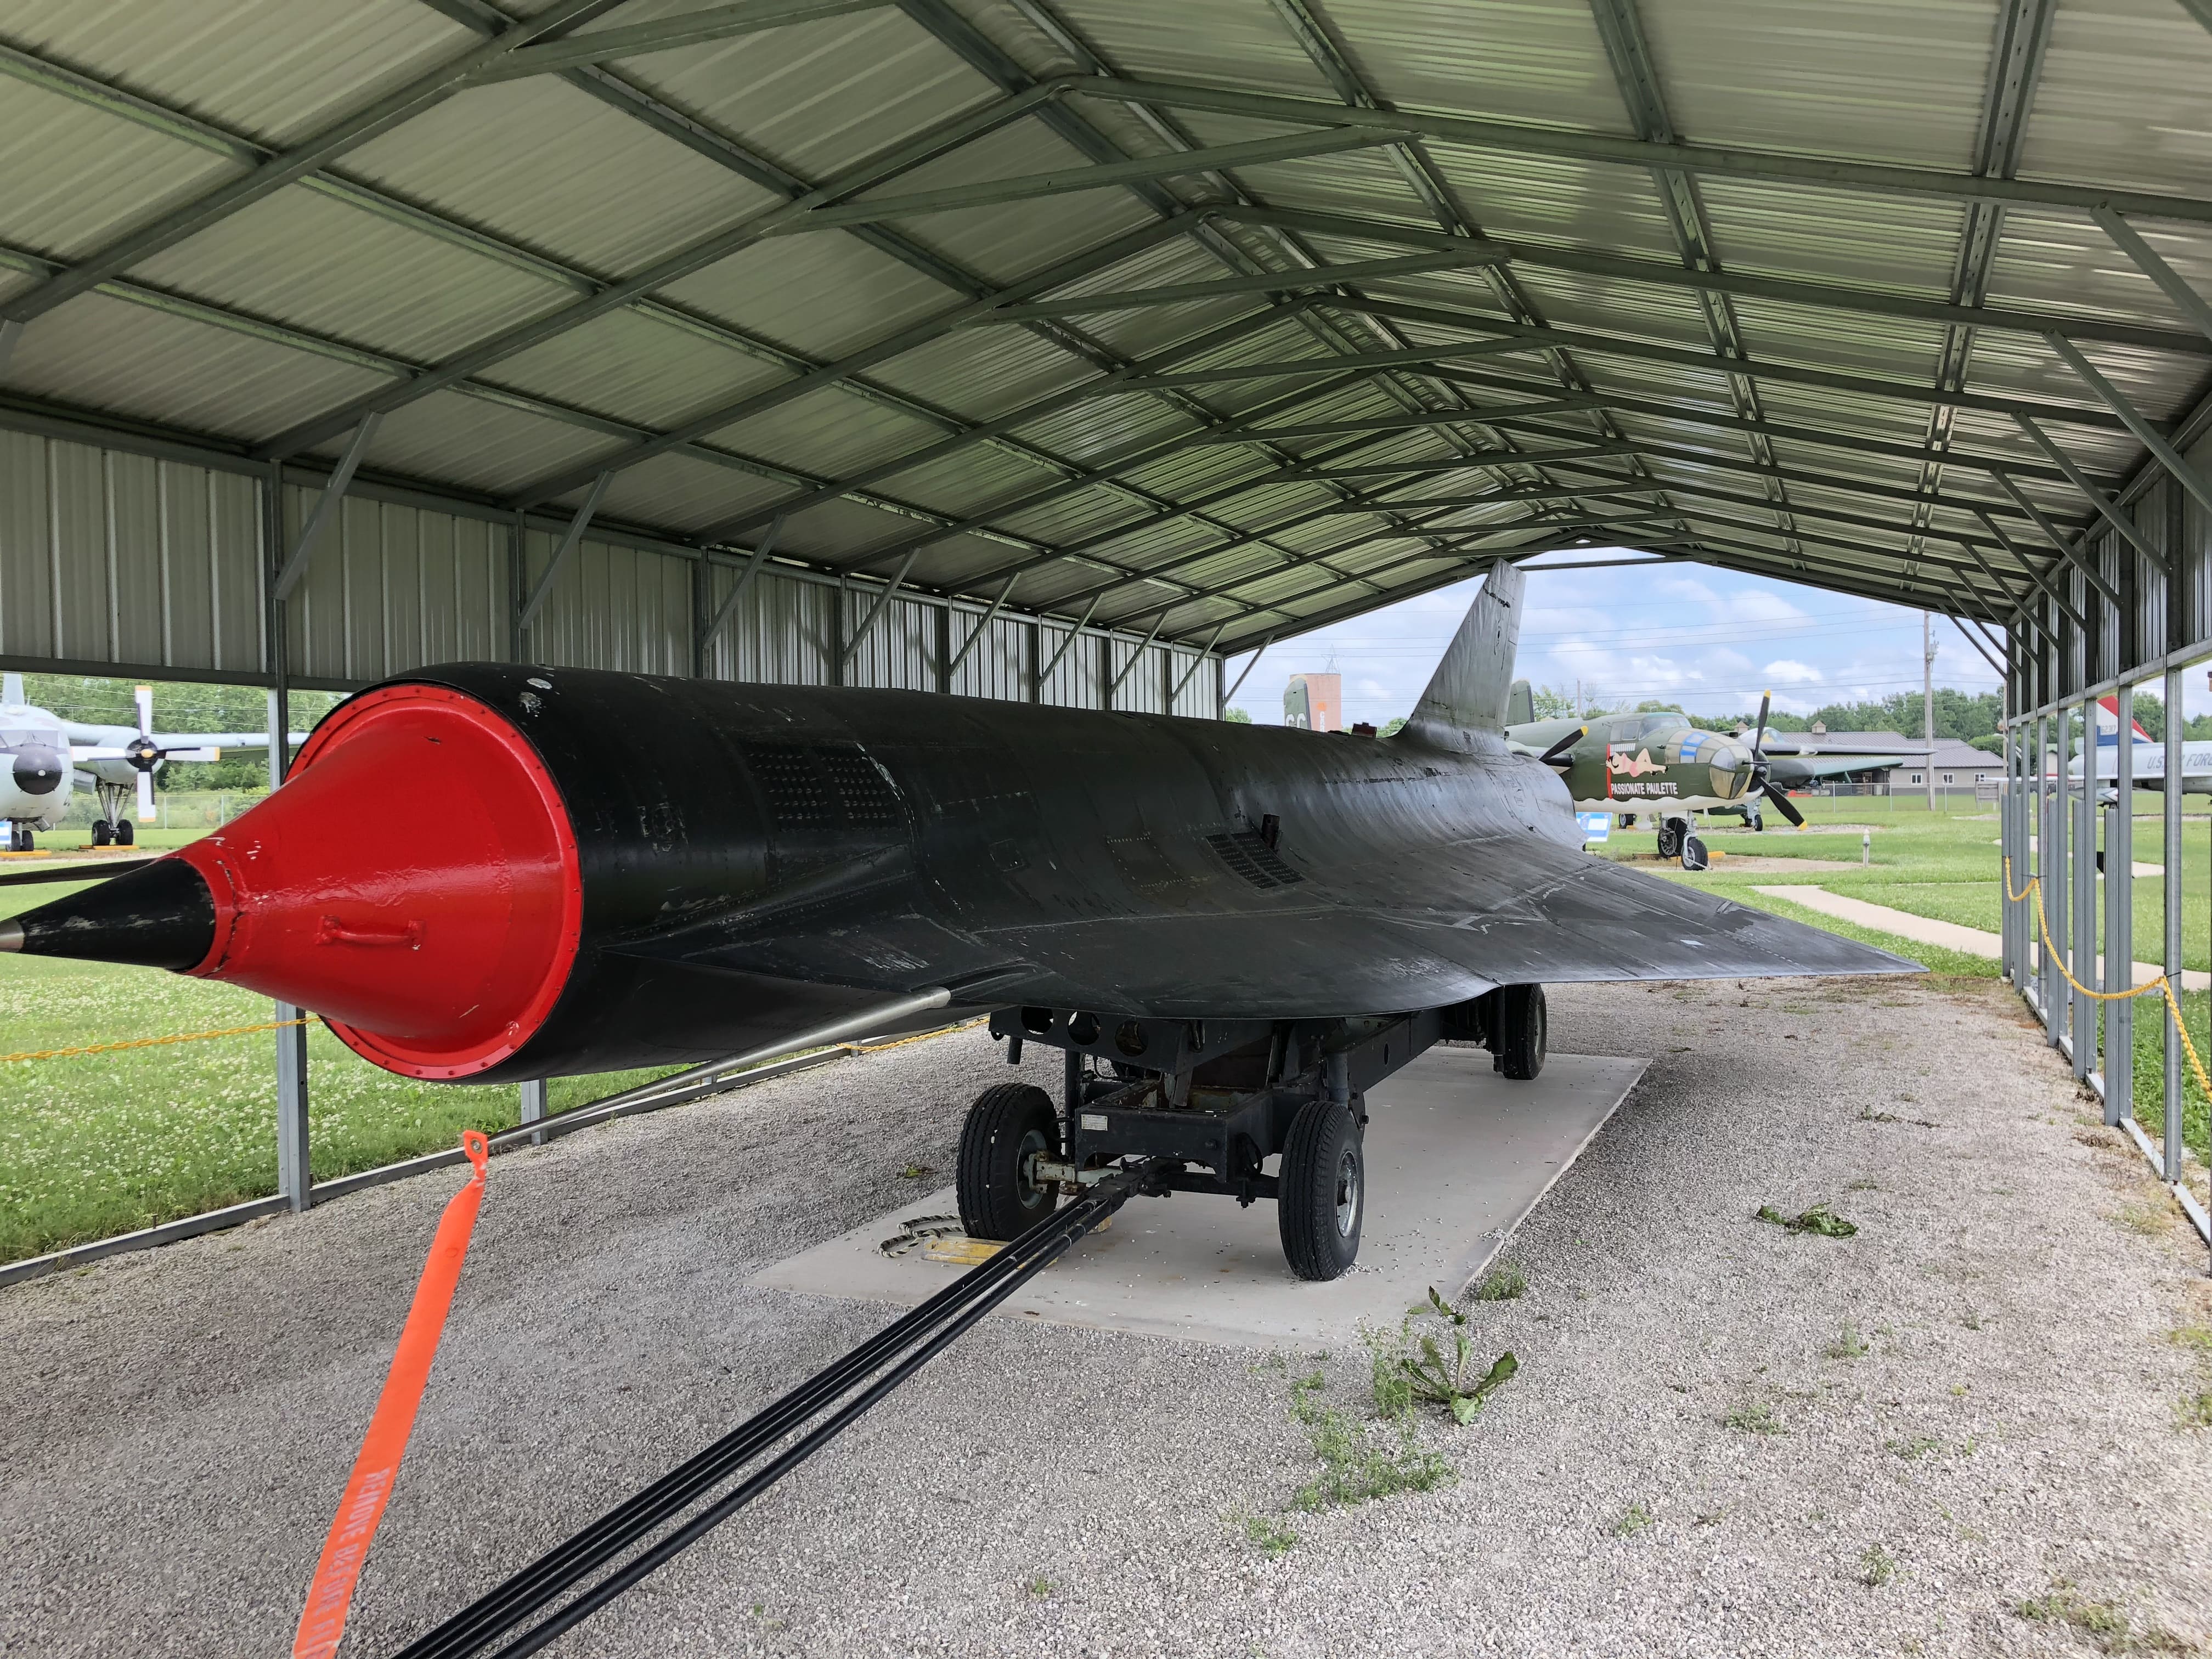 GTD-21 TAGBOARD – Air Museum